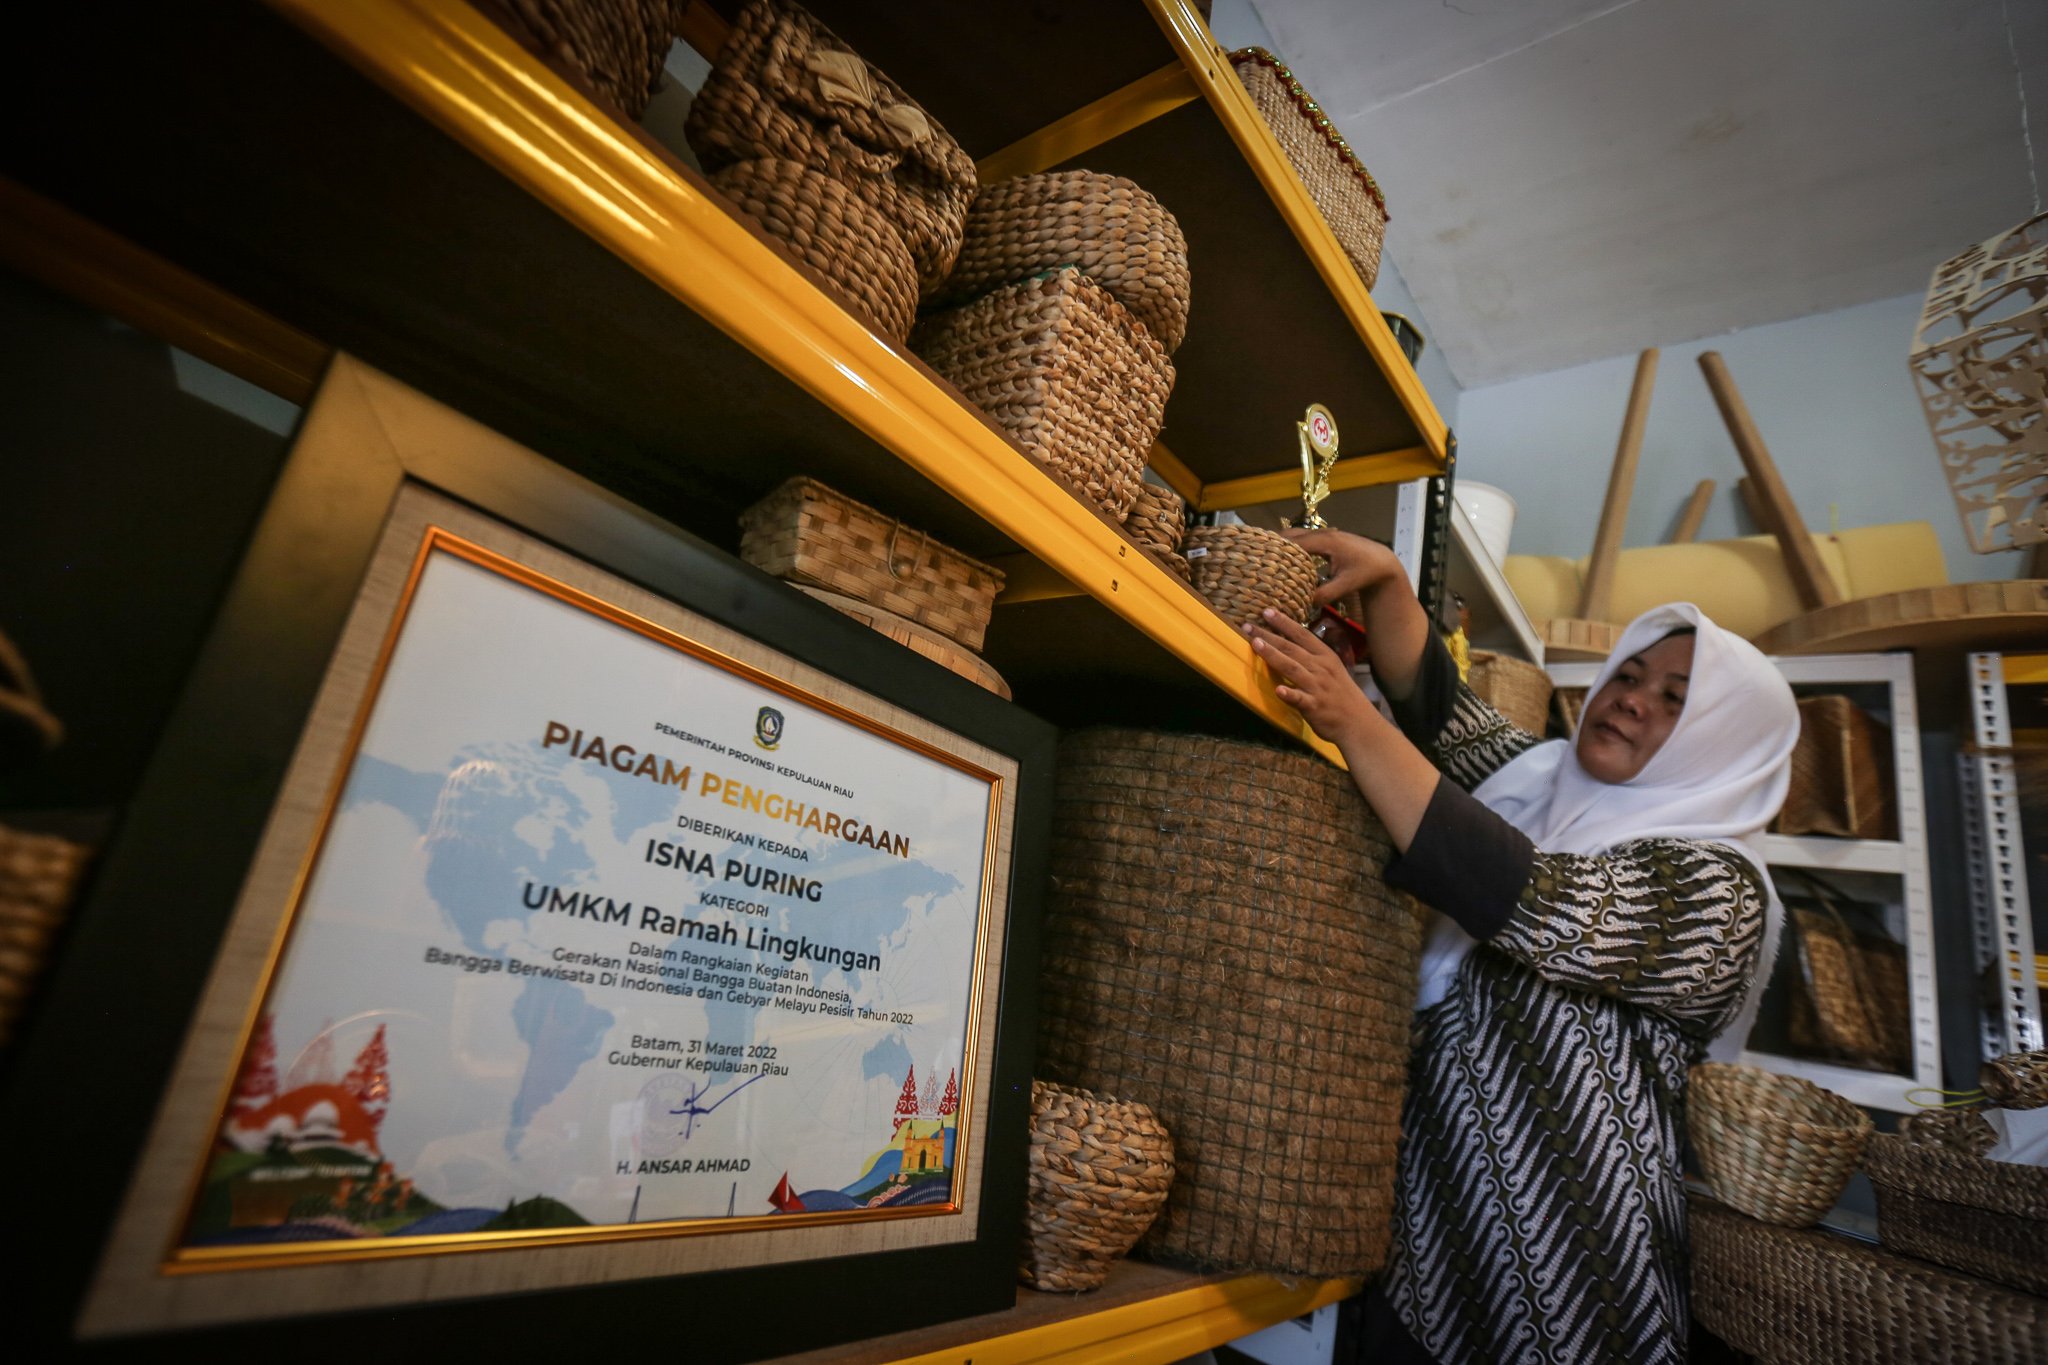 Tisnawati menata kerajinan tangan berbahan dasar eceng gondok miliknya di Isna Puring, Batam, Kepulauan Riau.